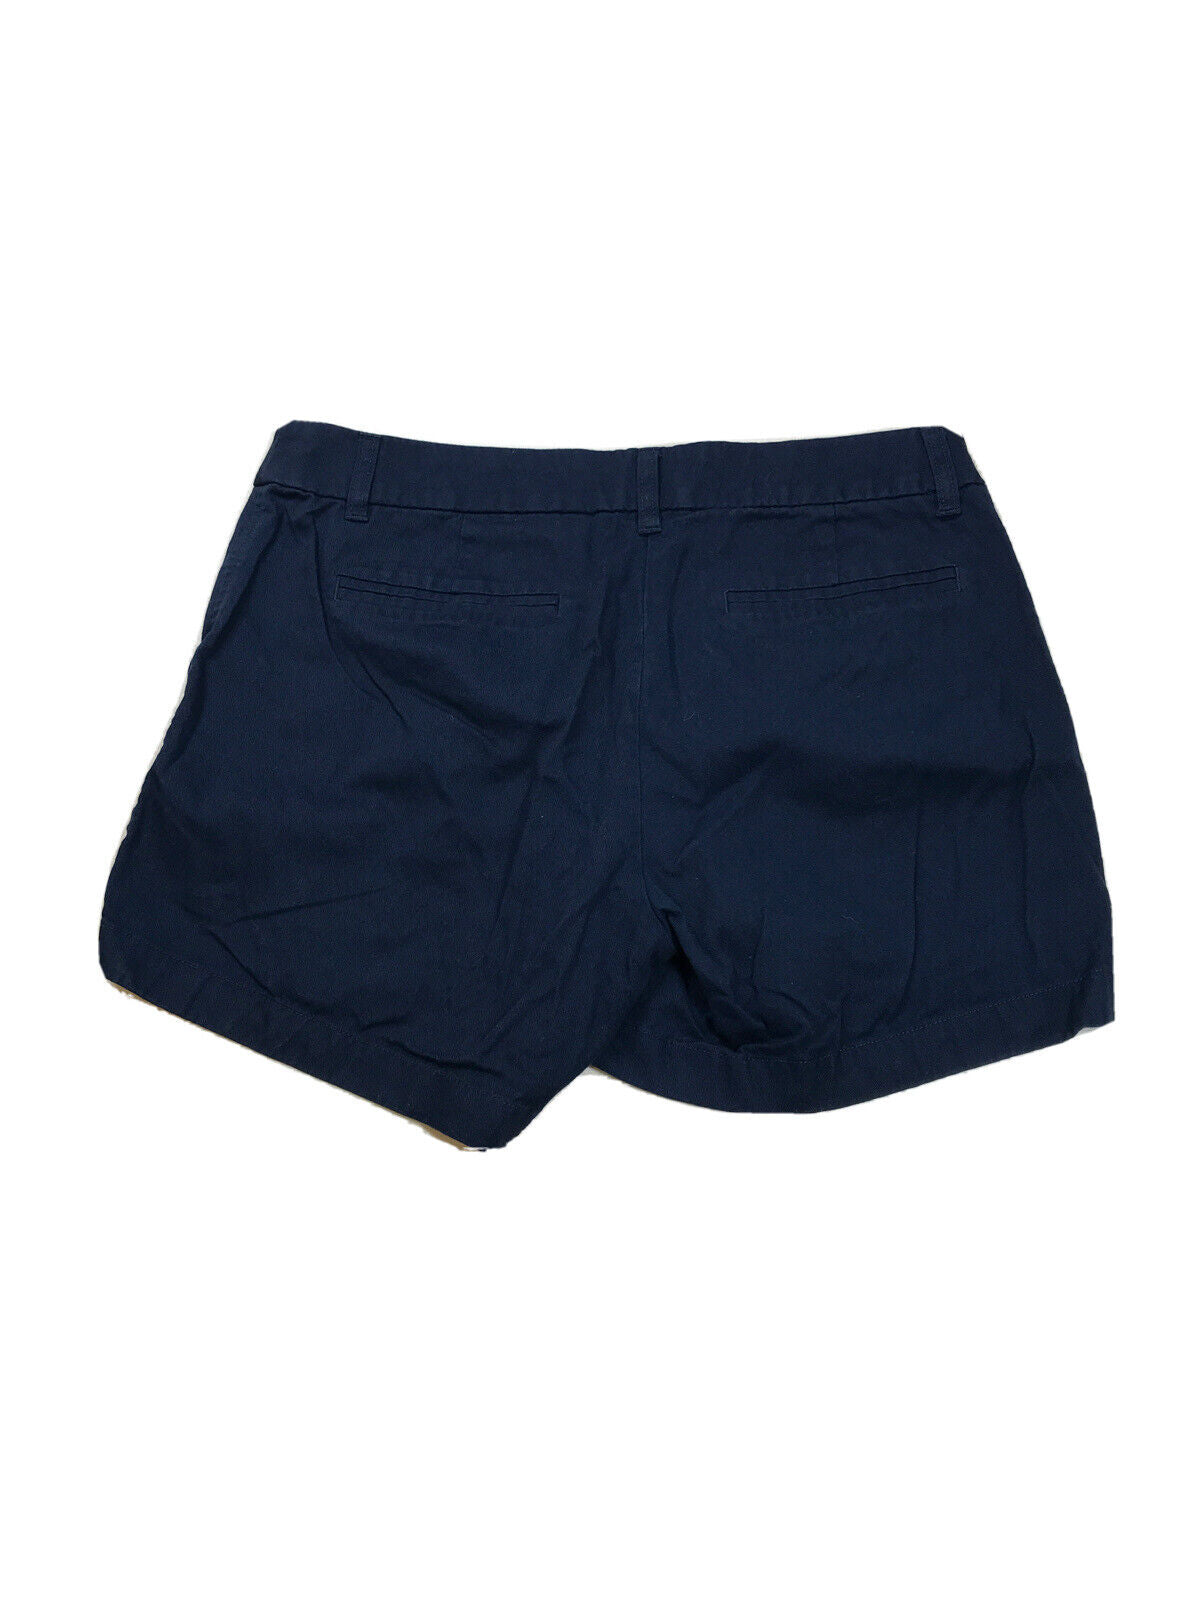 J.Crew Women's Blue Cotton Chino Shorts - 10